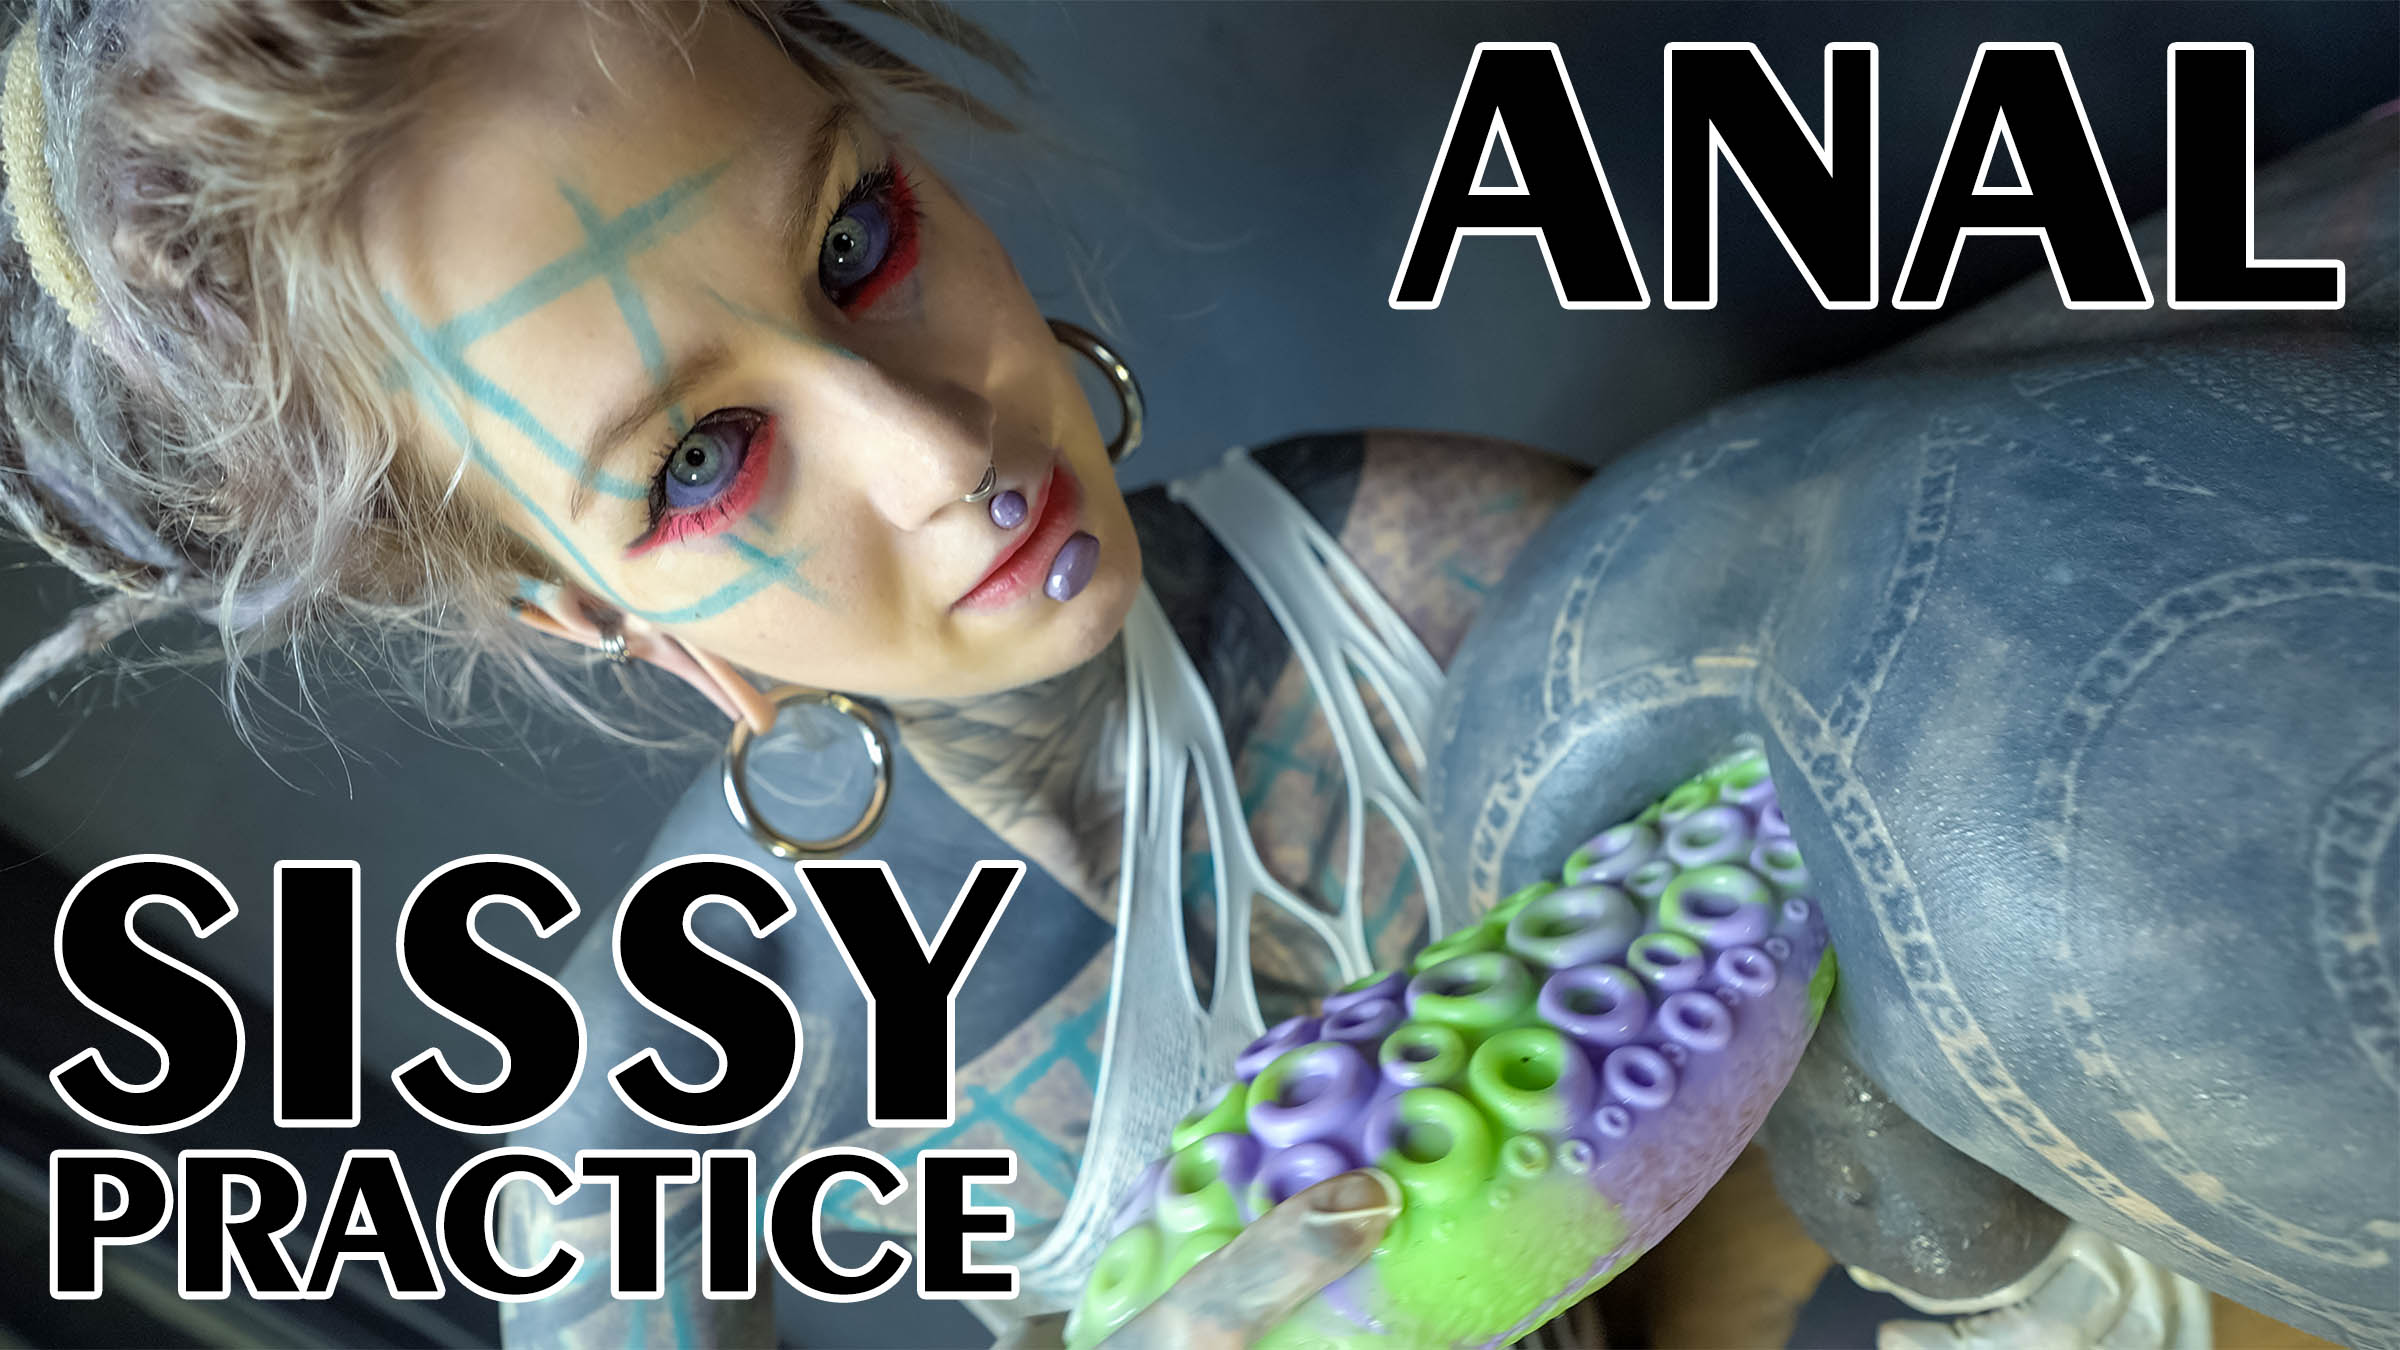 Anal Sissy Practice – Anuskatzz – Z Filmz Originals